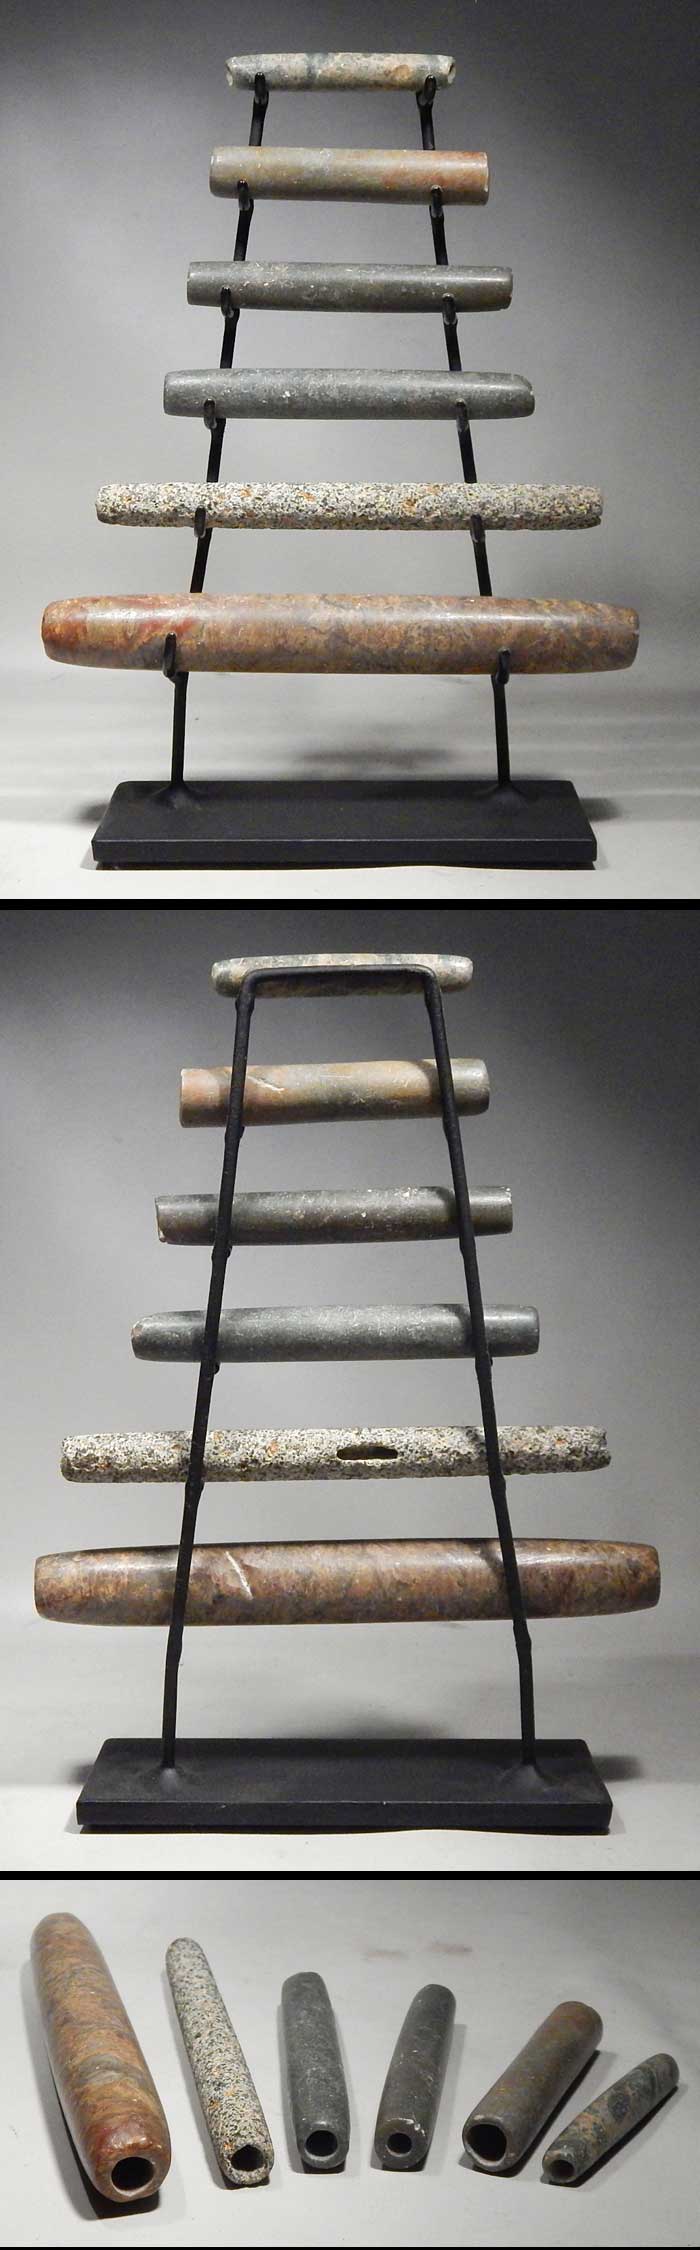 Pre-Columbian Maya Mayan Stone Tube Beads Inhalation Tubes